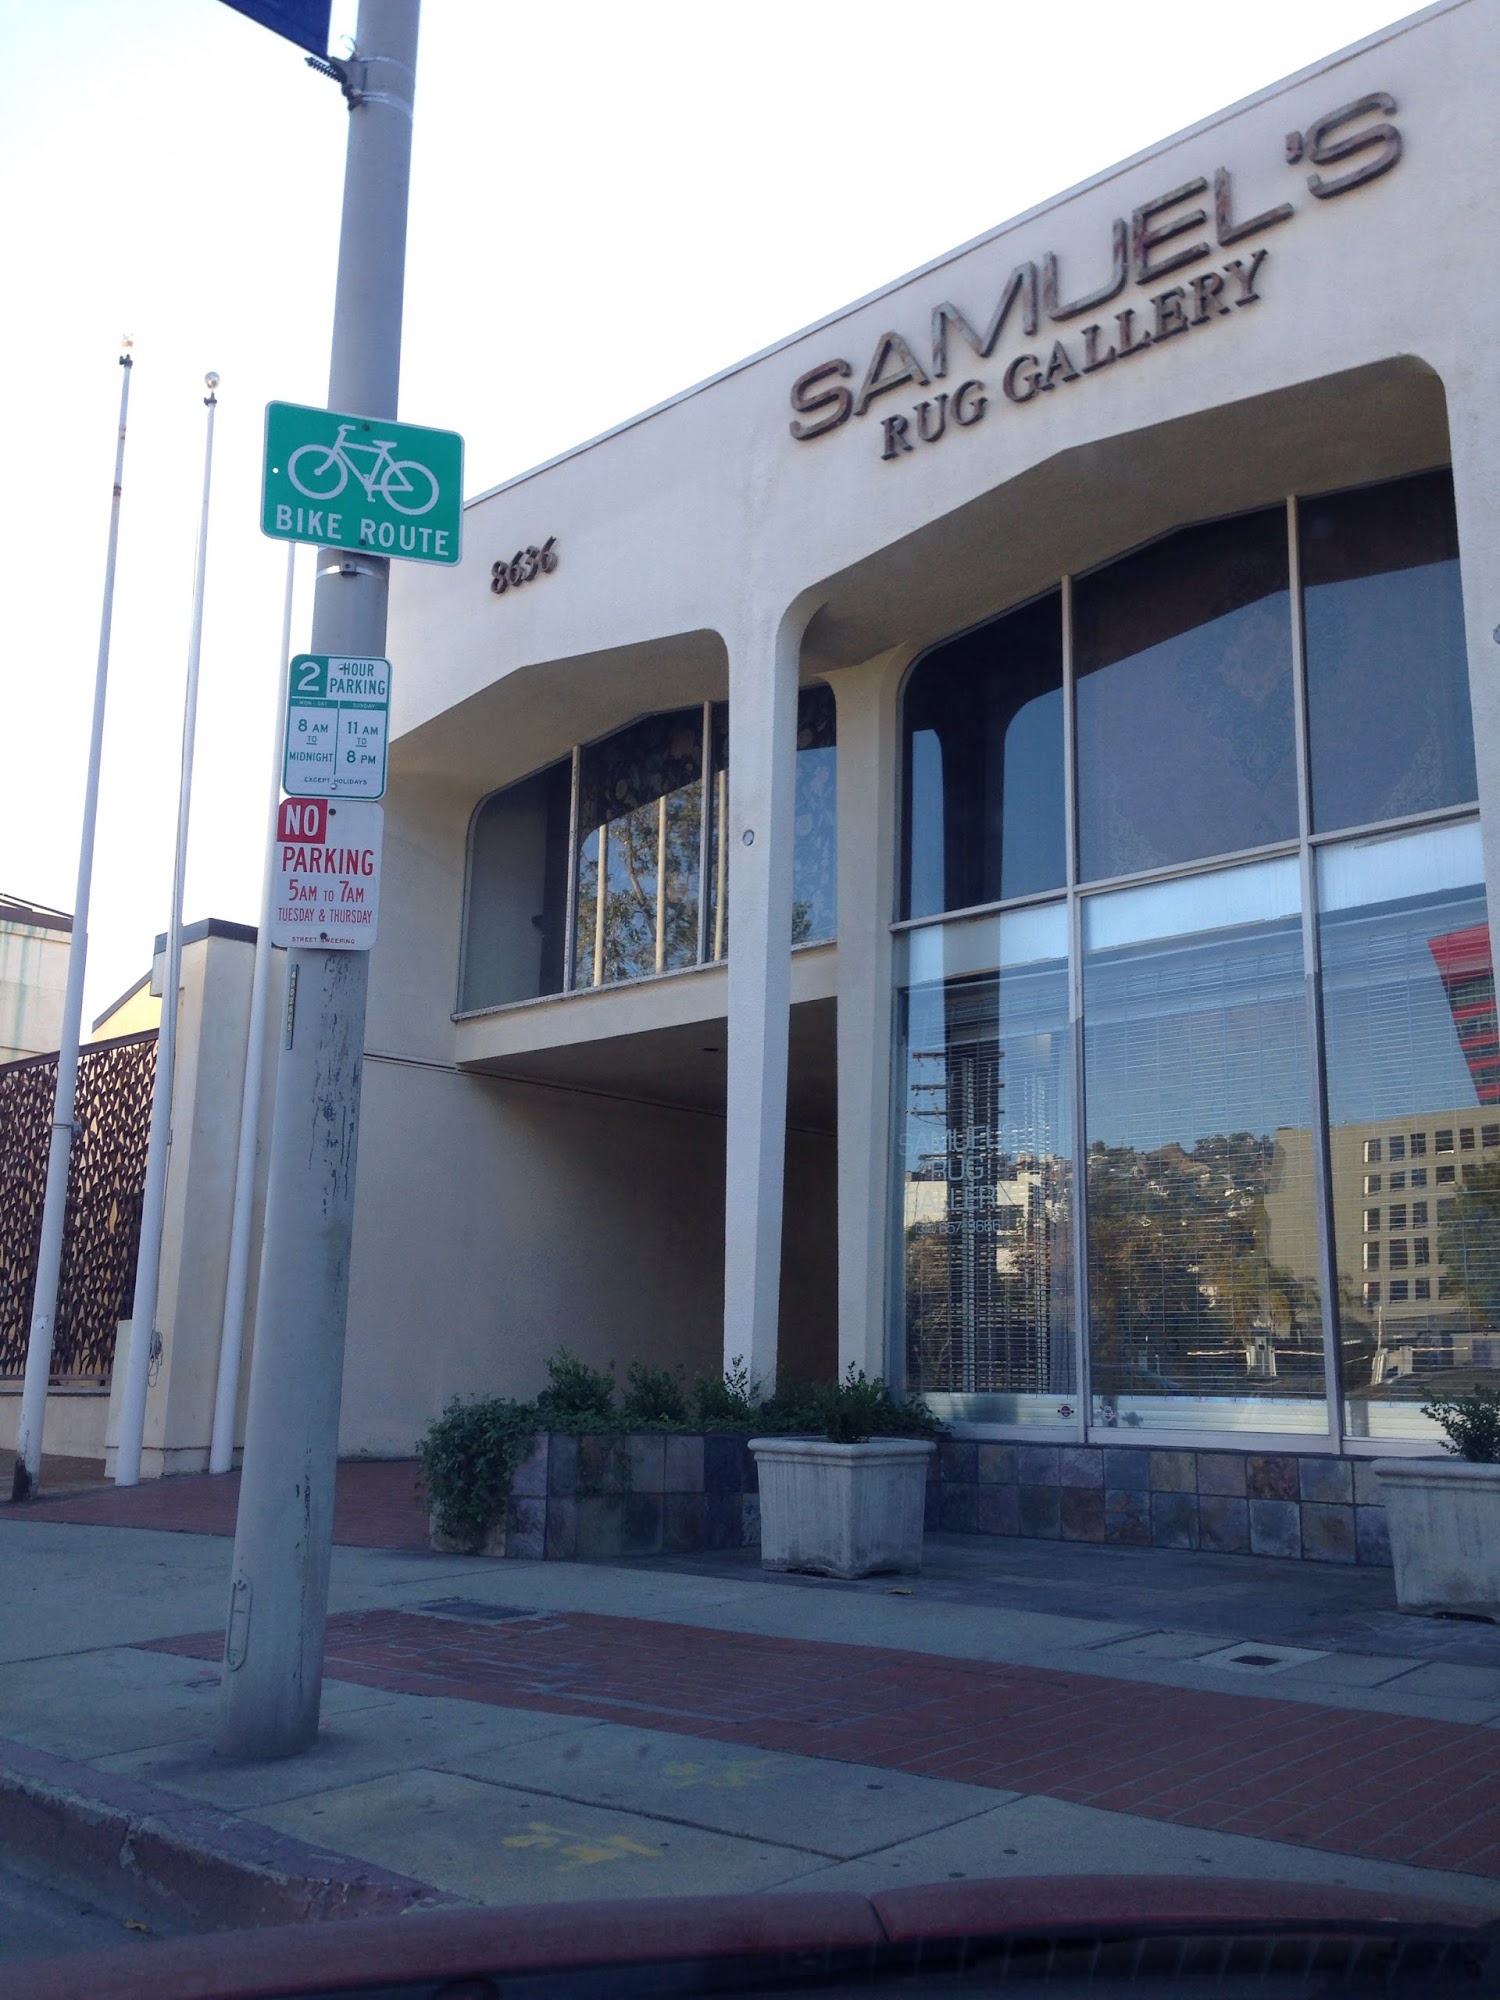 Samuel's Rug Gallery